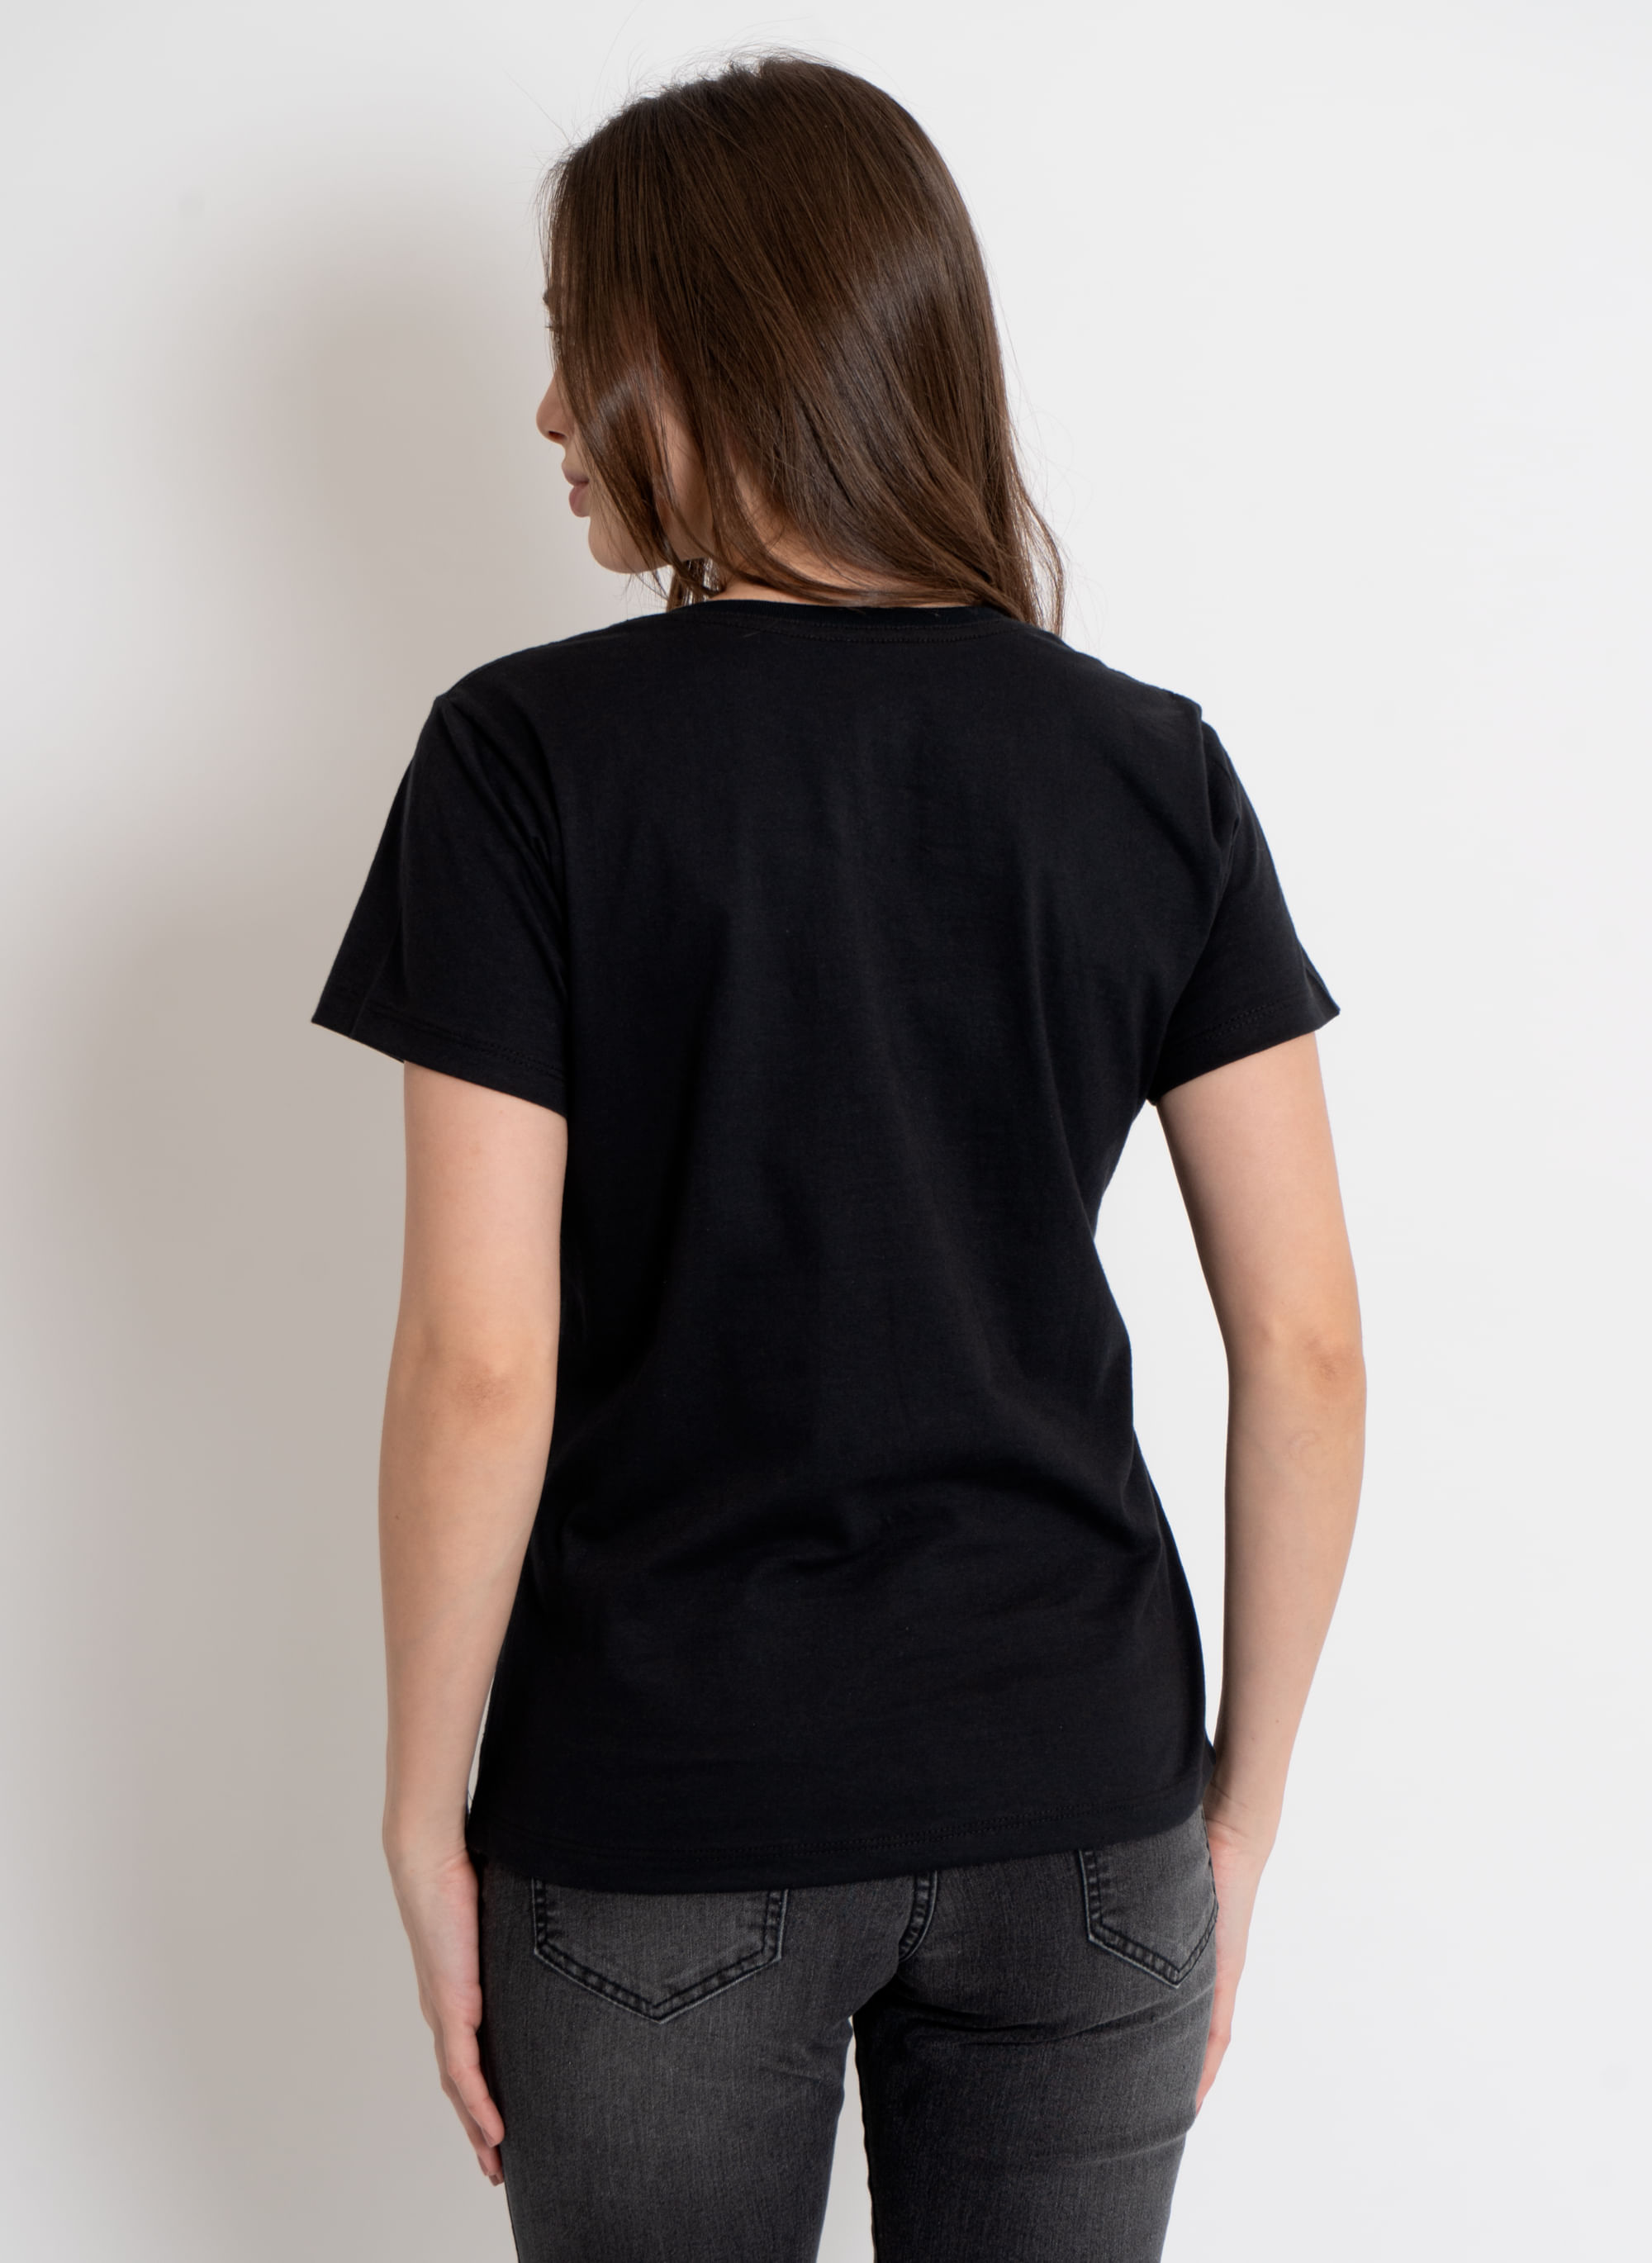 Camiseta-Feminina-Aleatory-Estampada-Fine-Preta-Preto-P